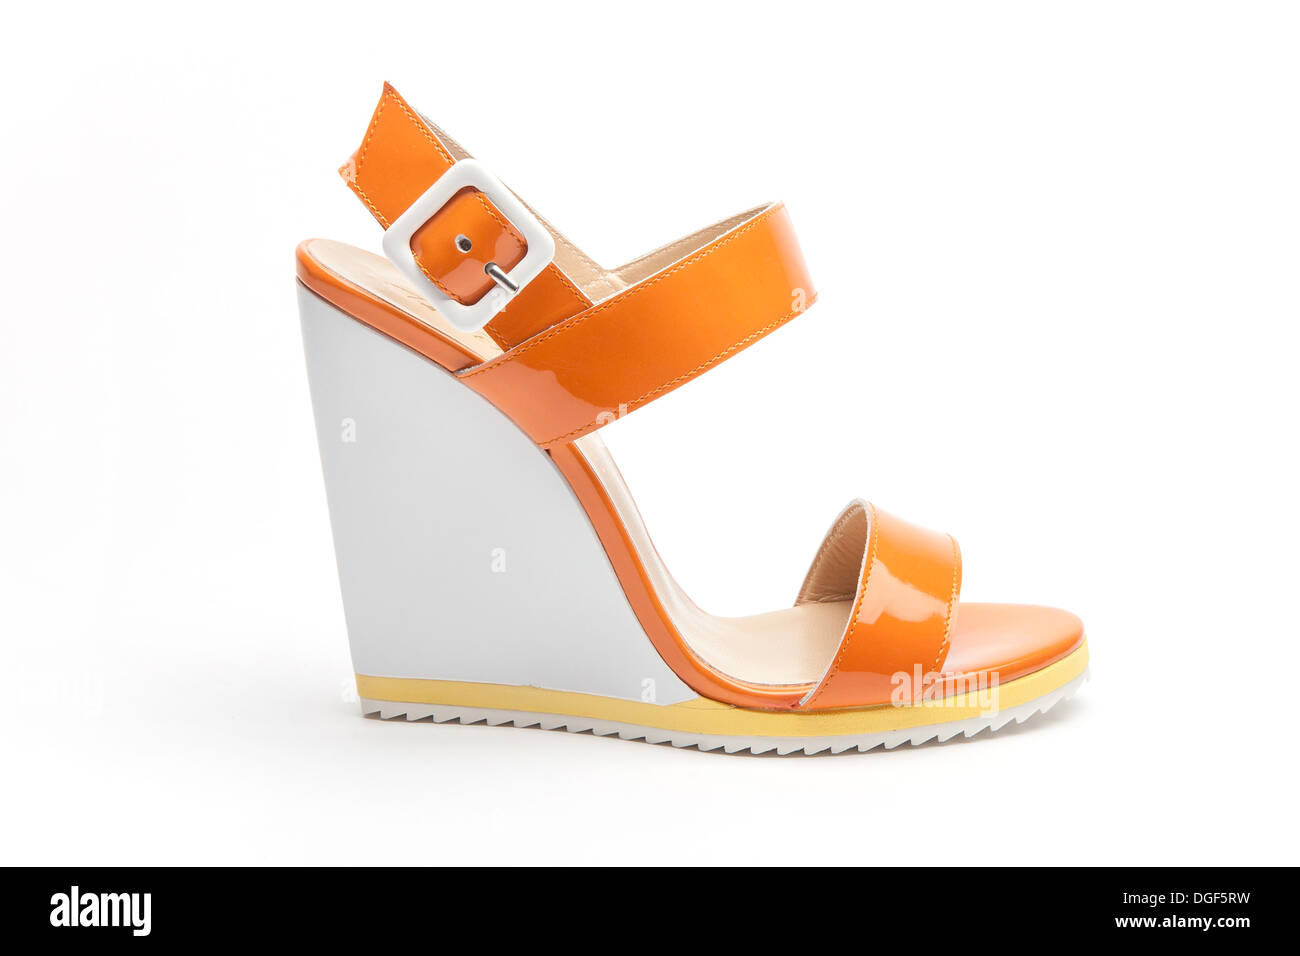 White and Orange high heeled wedge shoes Stock Photo - Alamy